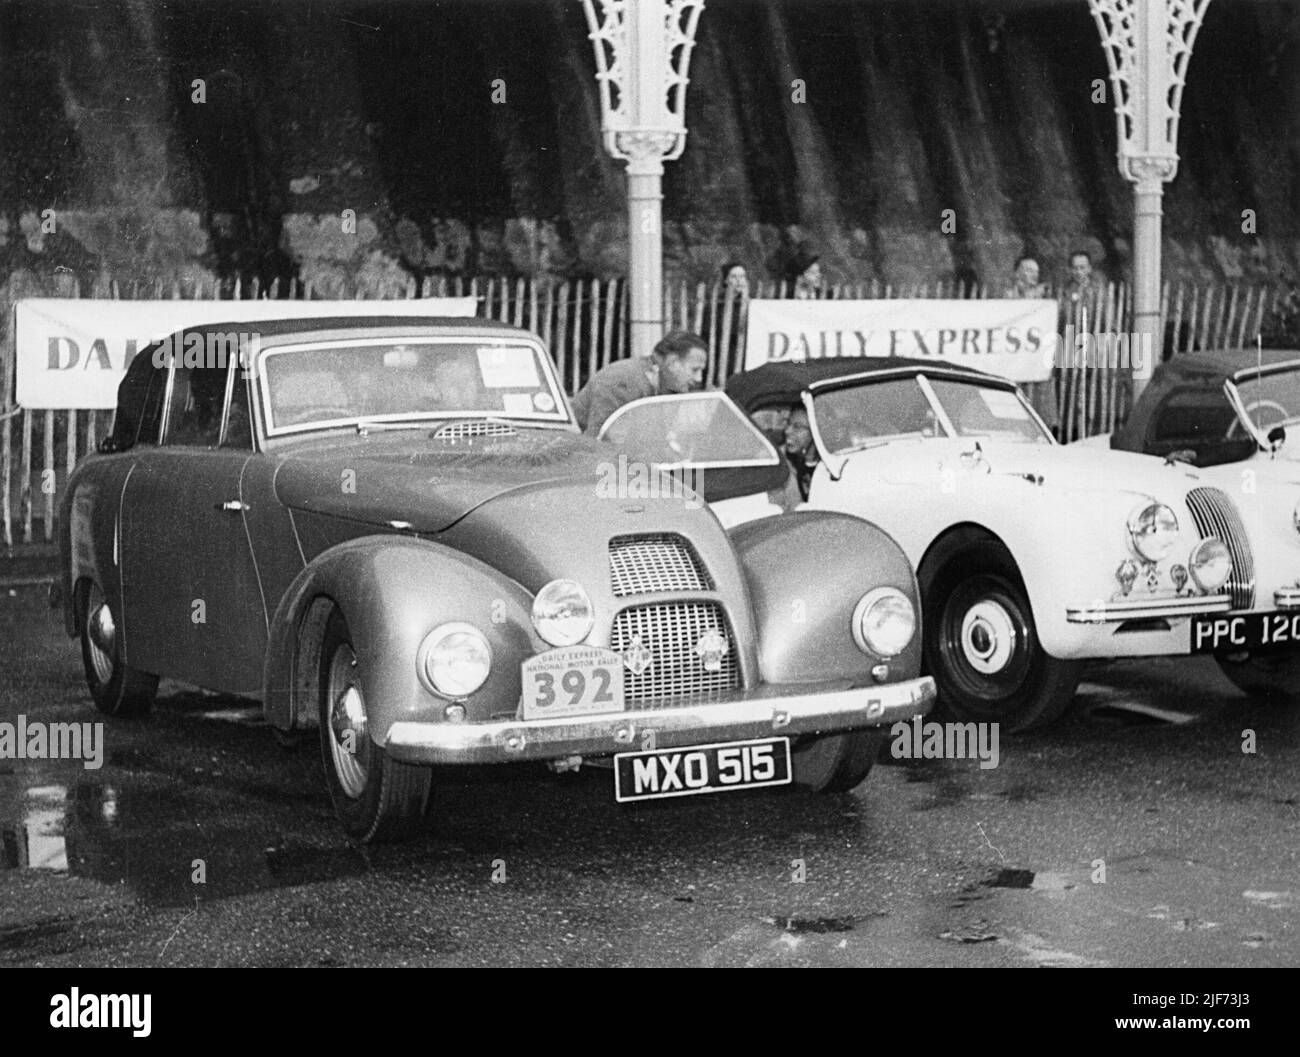 Allard M2x dhc. Rally Daily Express 1952 Foto de stock